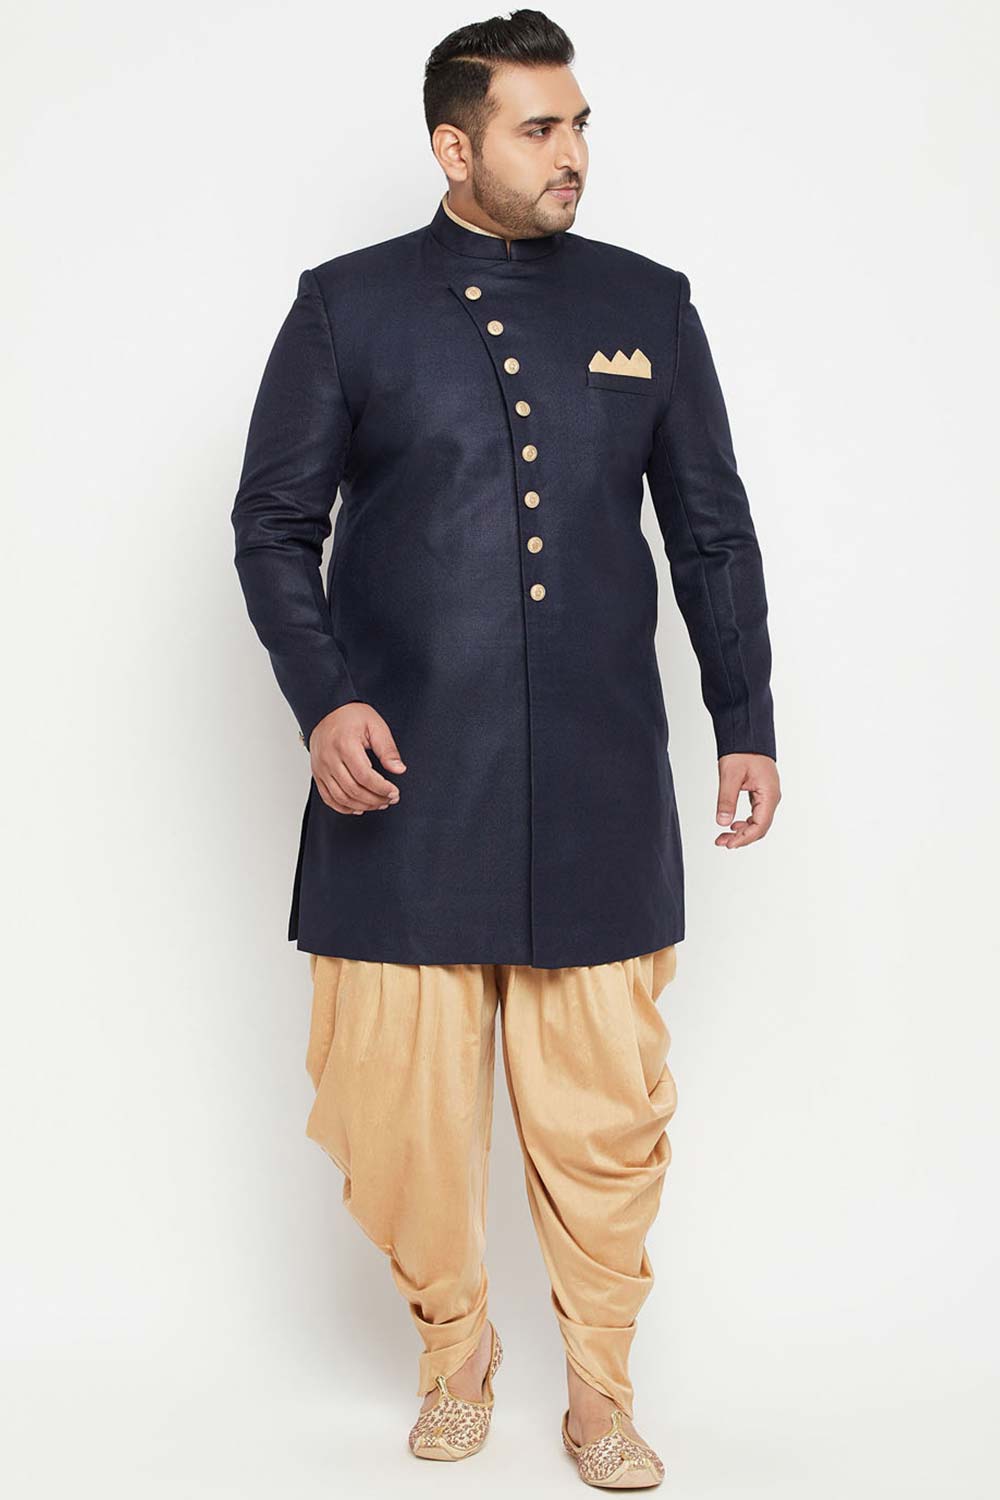 Buy Men's Silk Blend Solid Sherwani Top in Navy Blue - Zoom Out